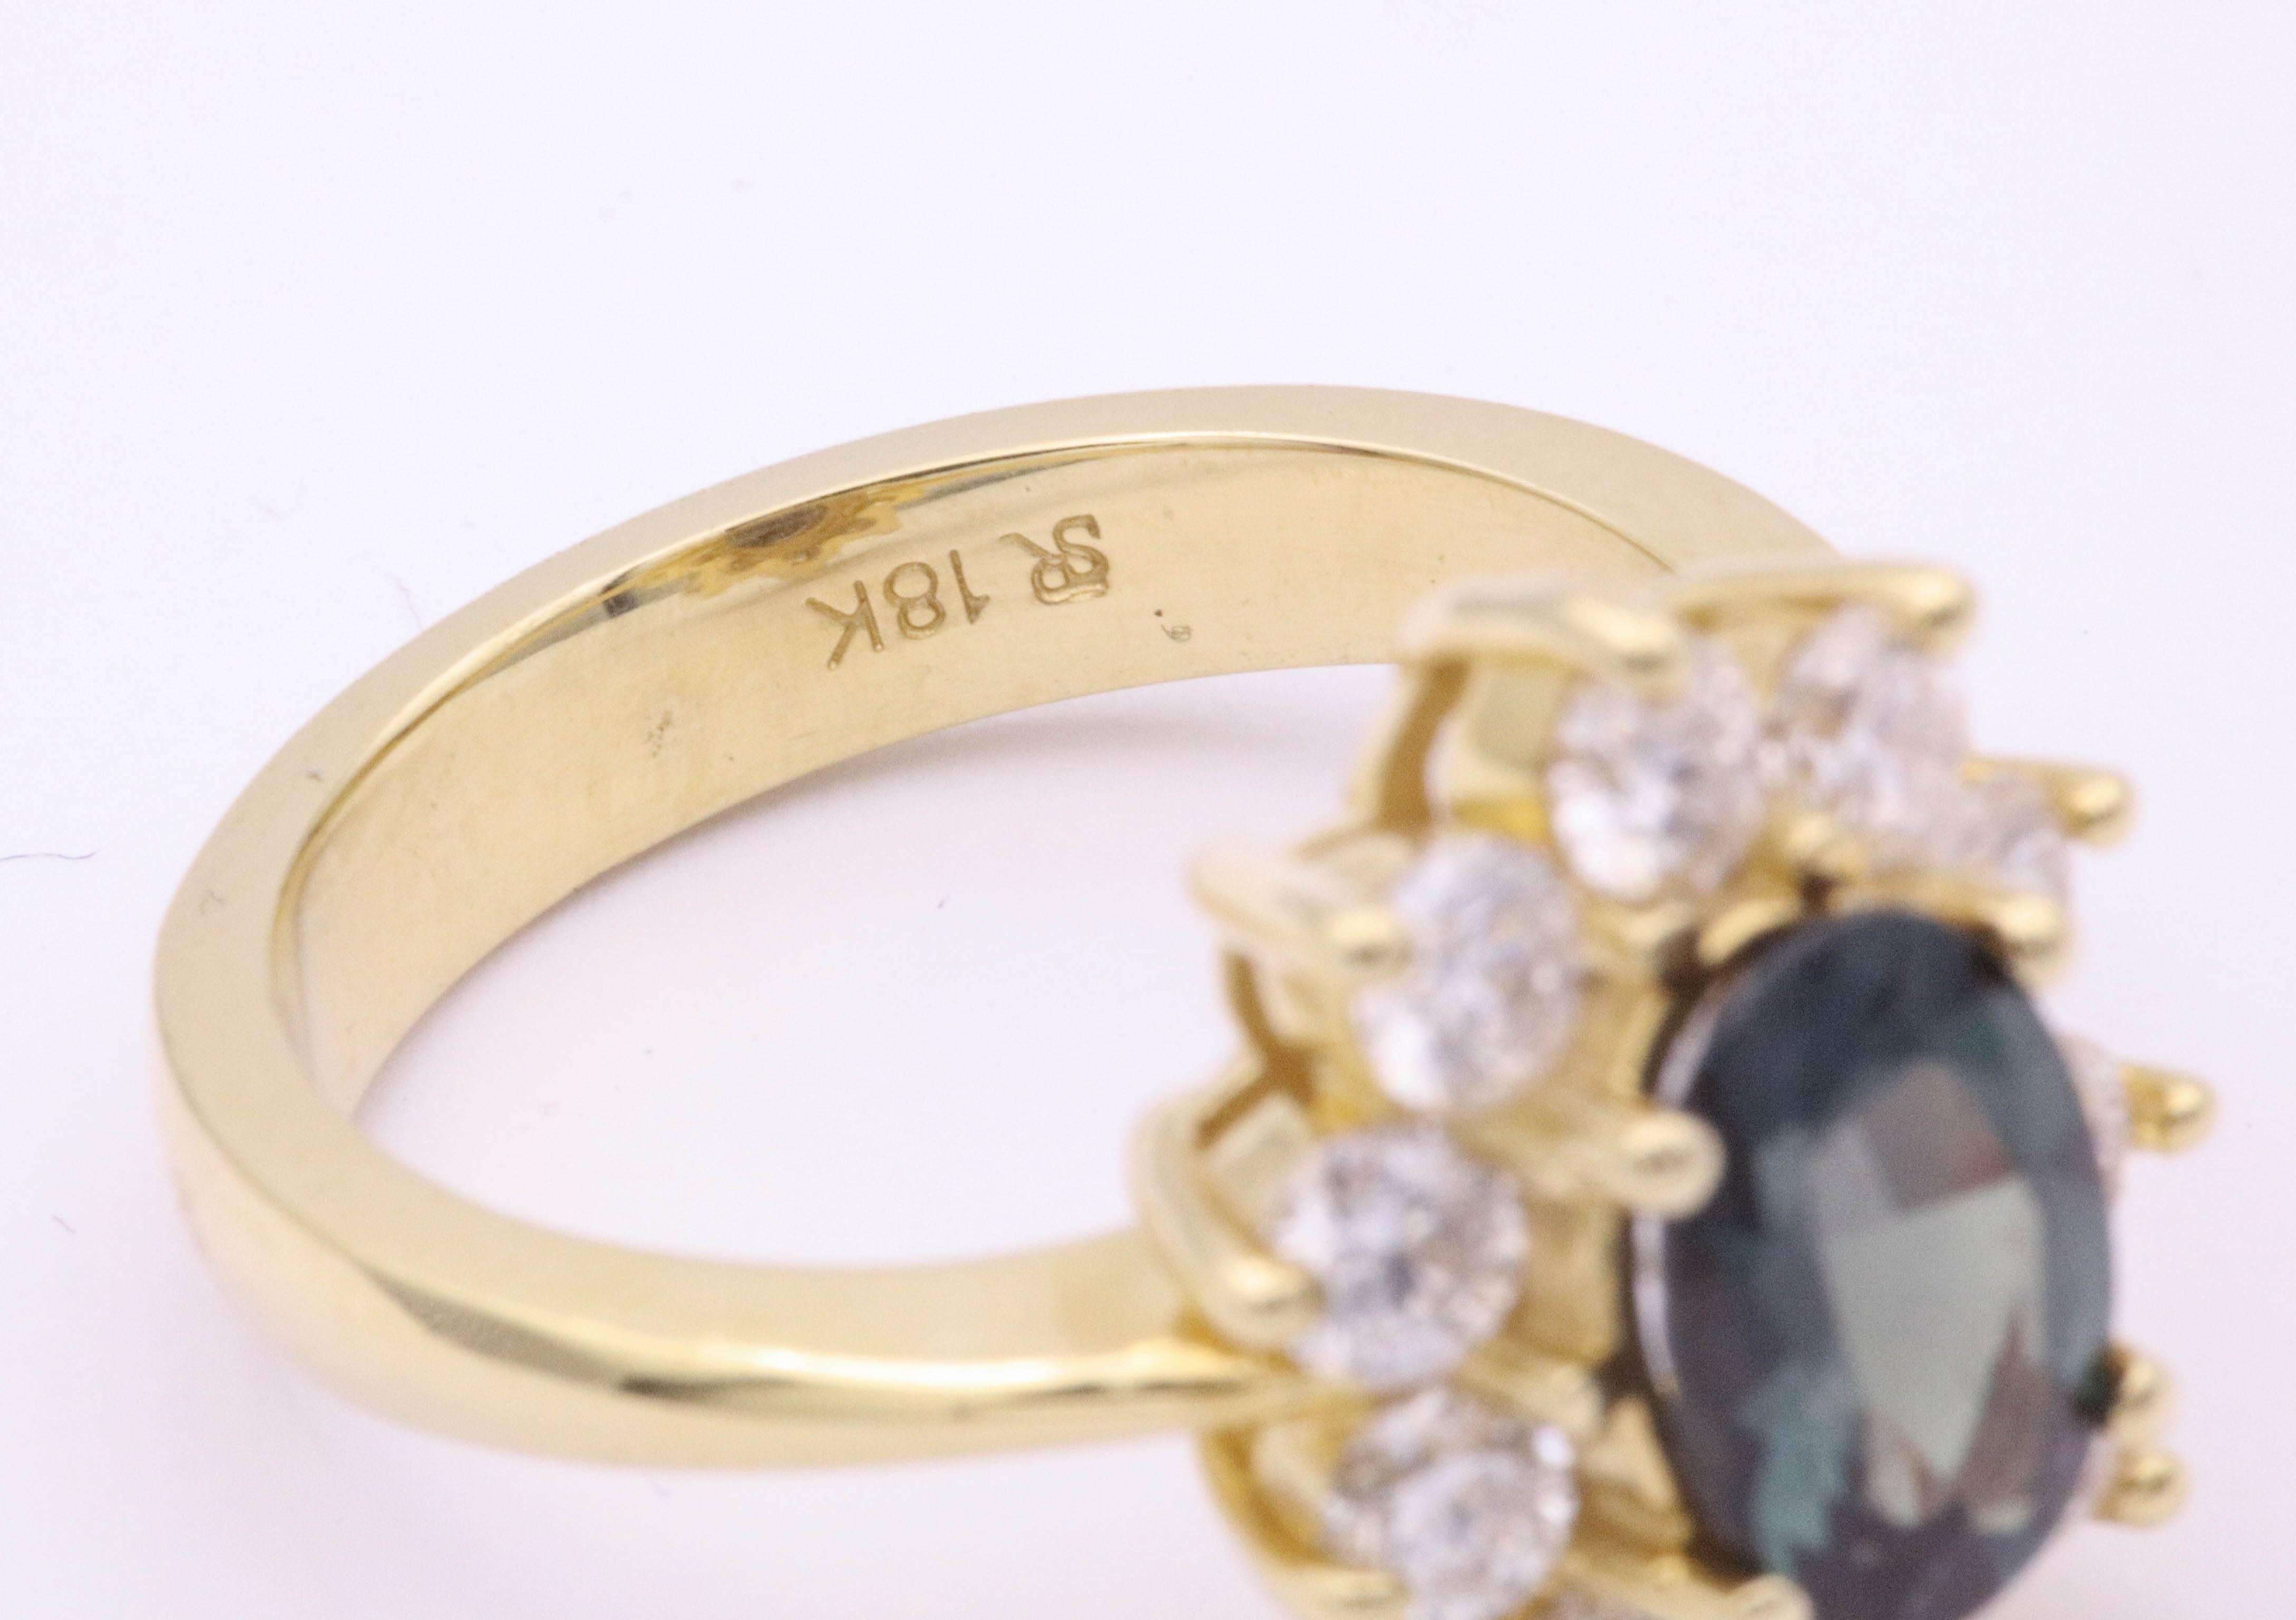 Women's HARBOR D. Alexandrite Lady Diana Ring with GUB Certificate 2.26 Carat